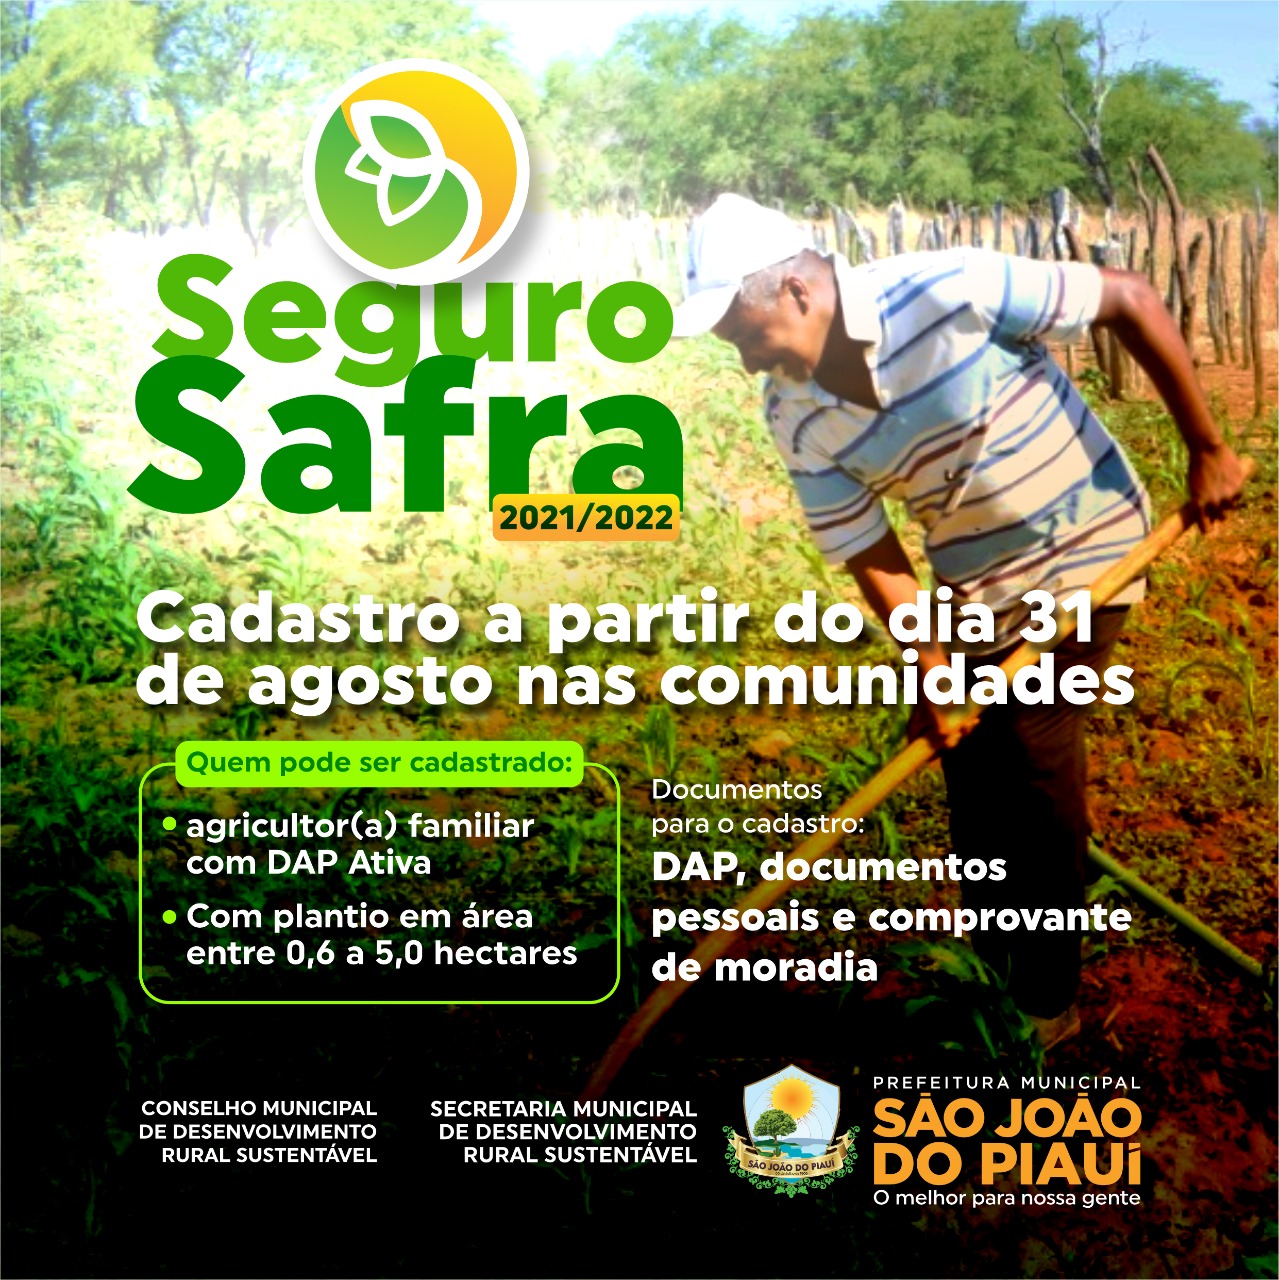 Seguro Safra 2021/2022: cadastro inicia hoje, dia 31, nas comunidades rurais